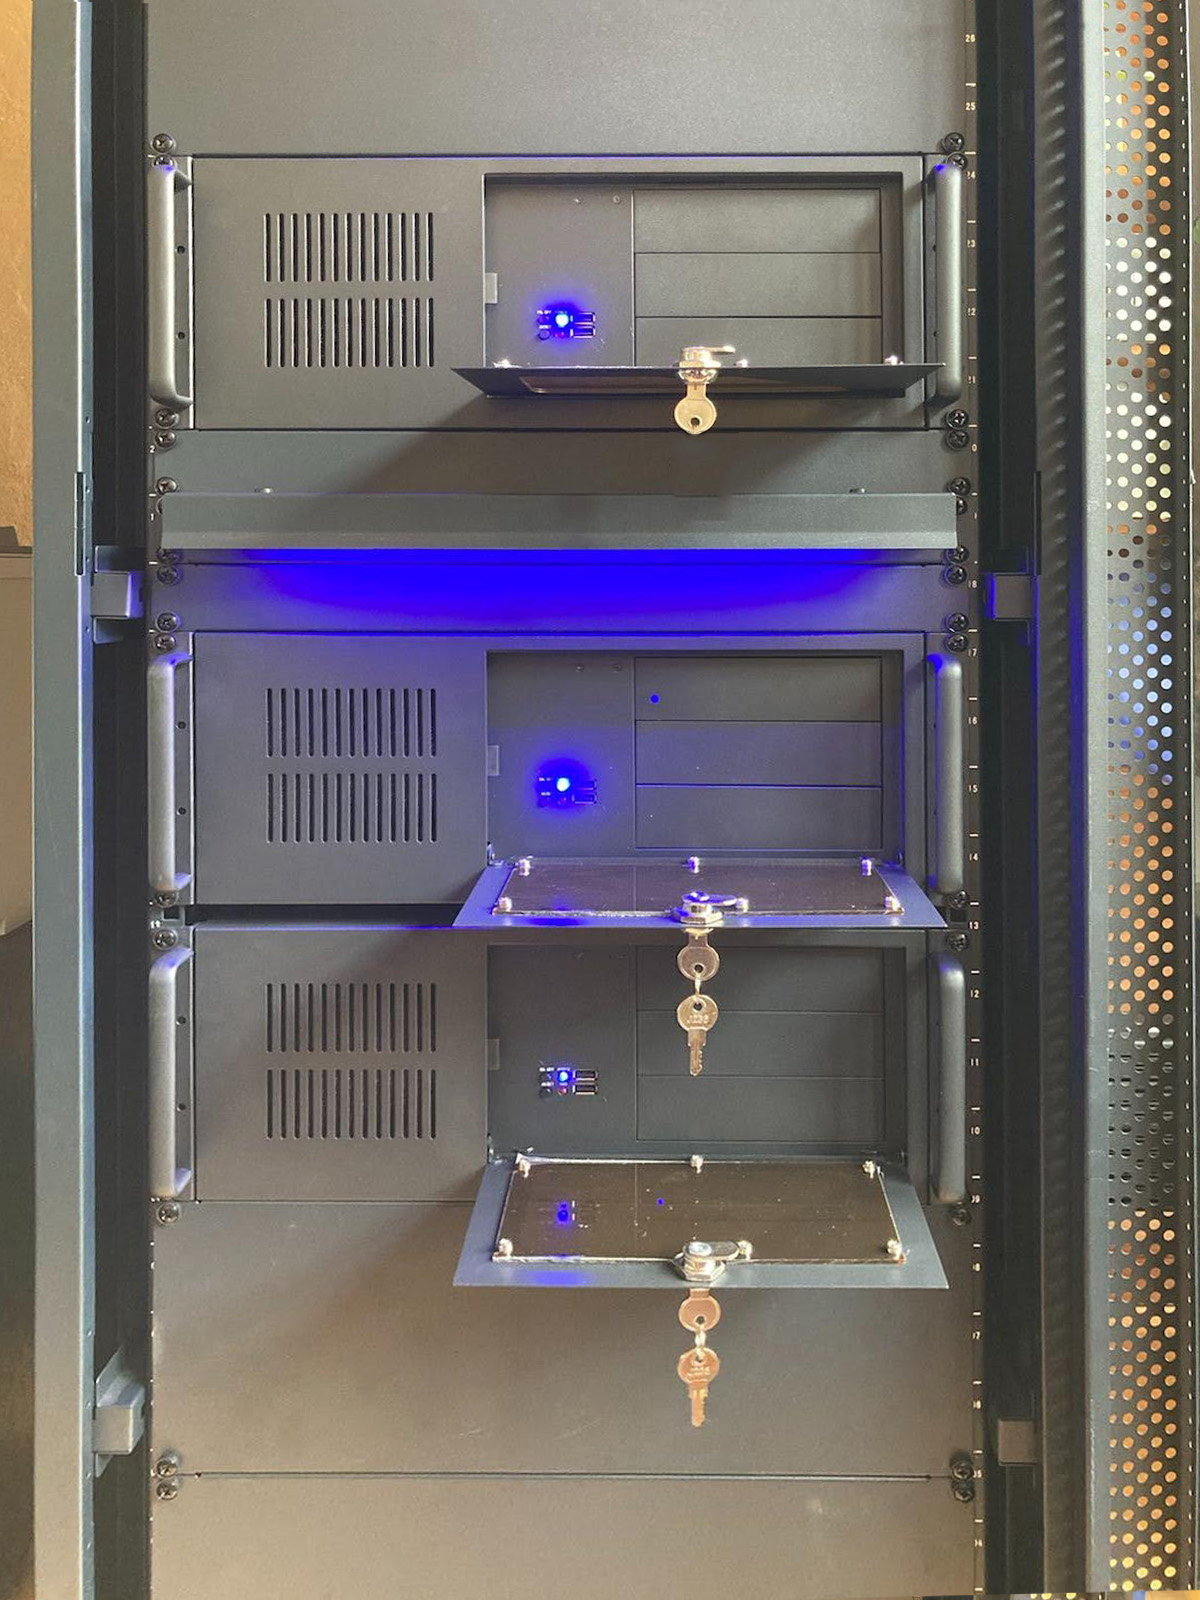 Monitoring Cabinet 3 server modules